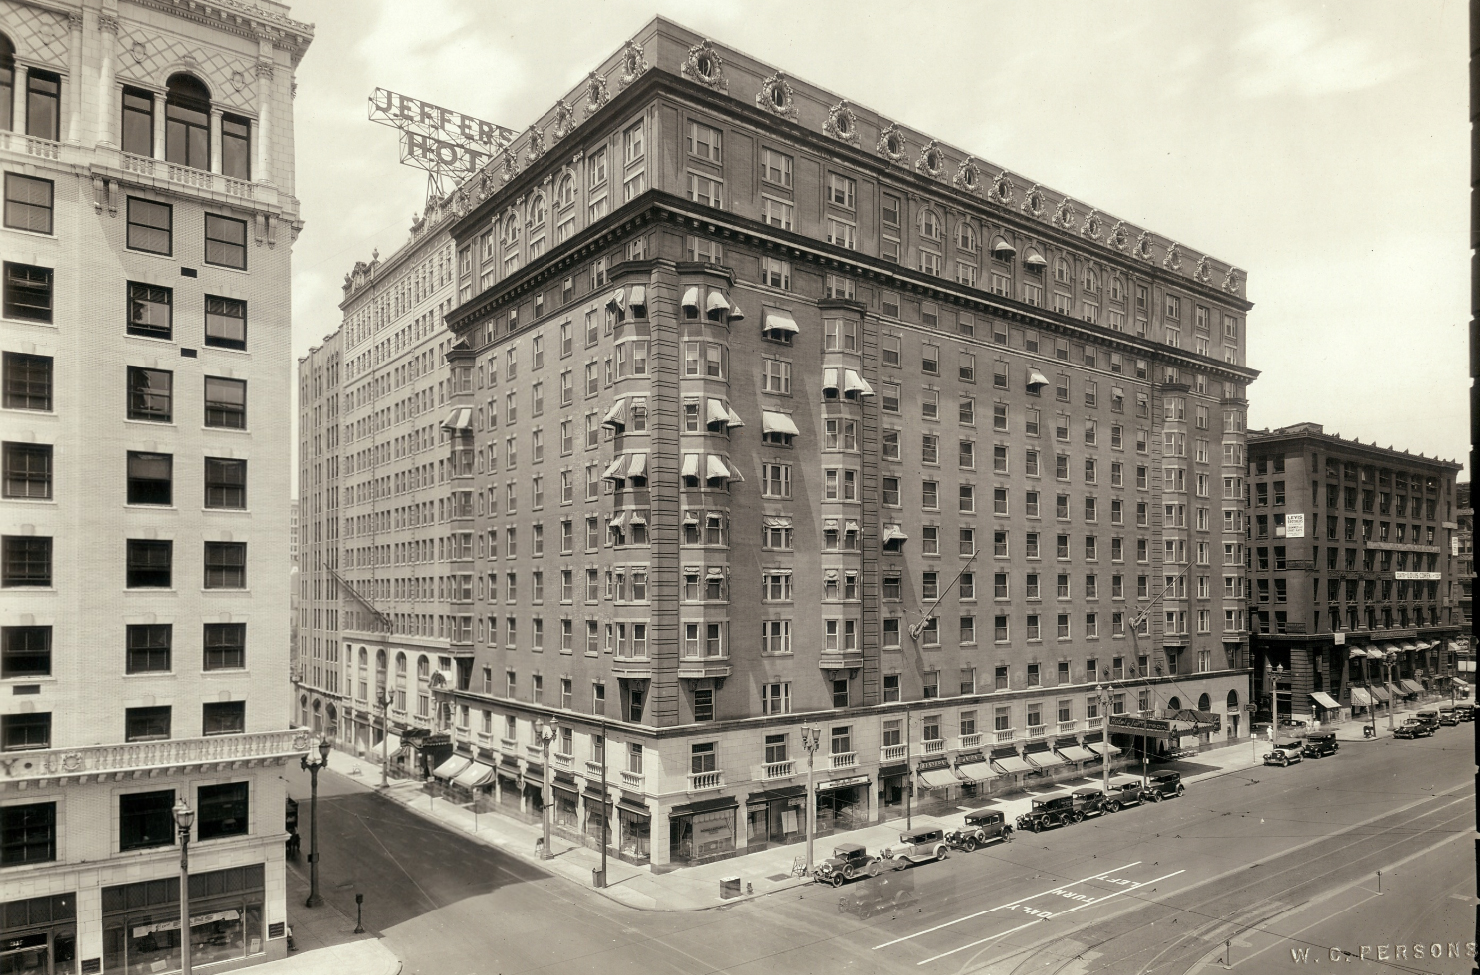 Historic Hotel Jefferson photos courtesy of the Missouri Historical Society